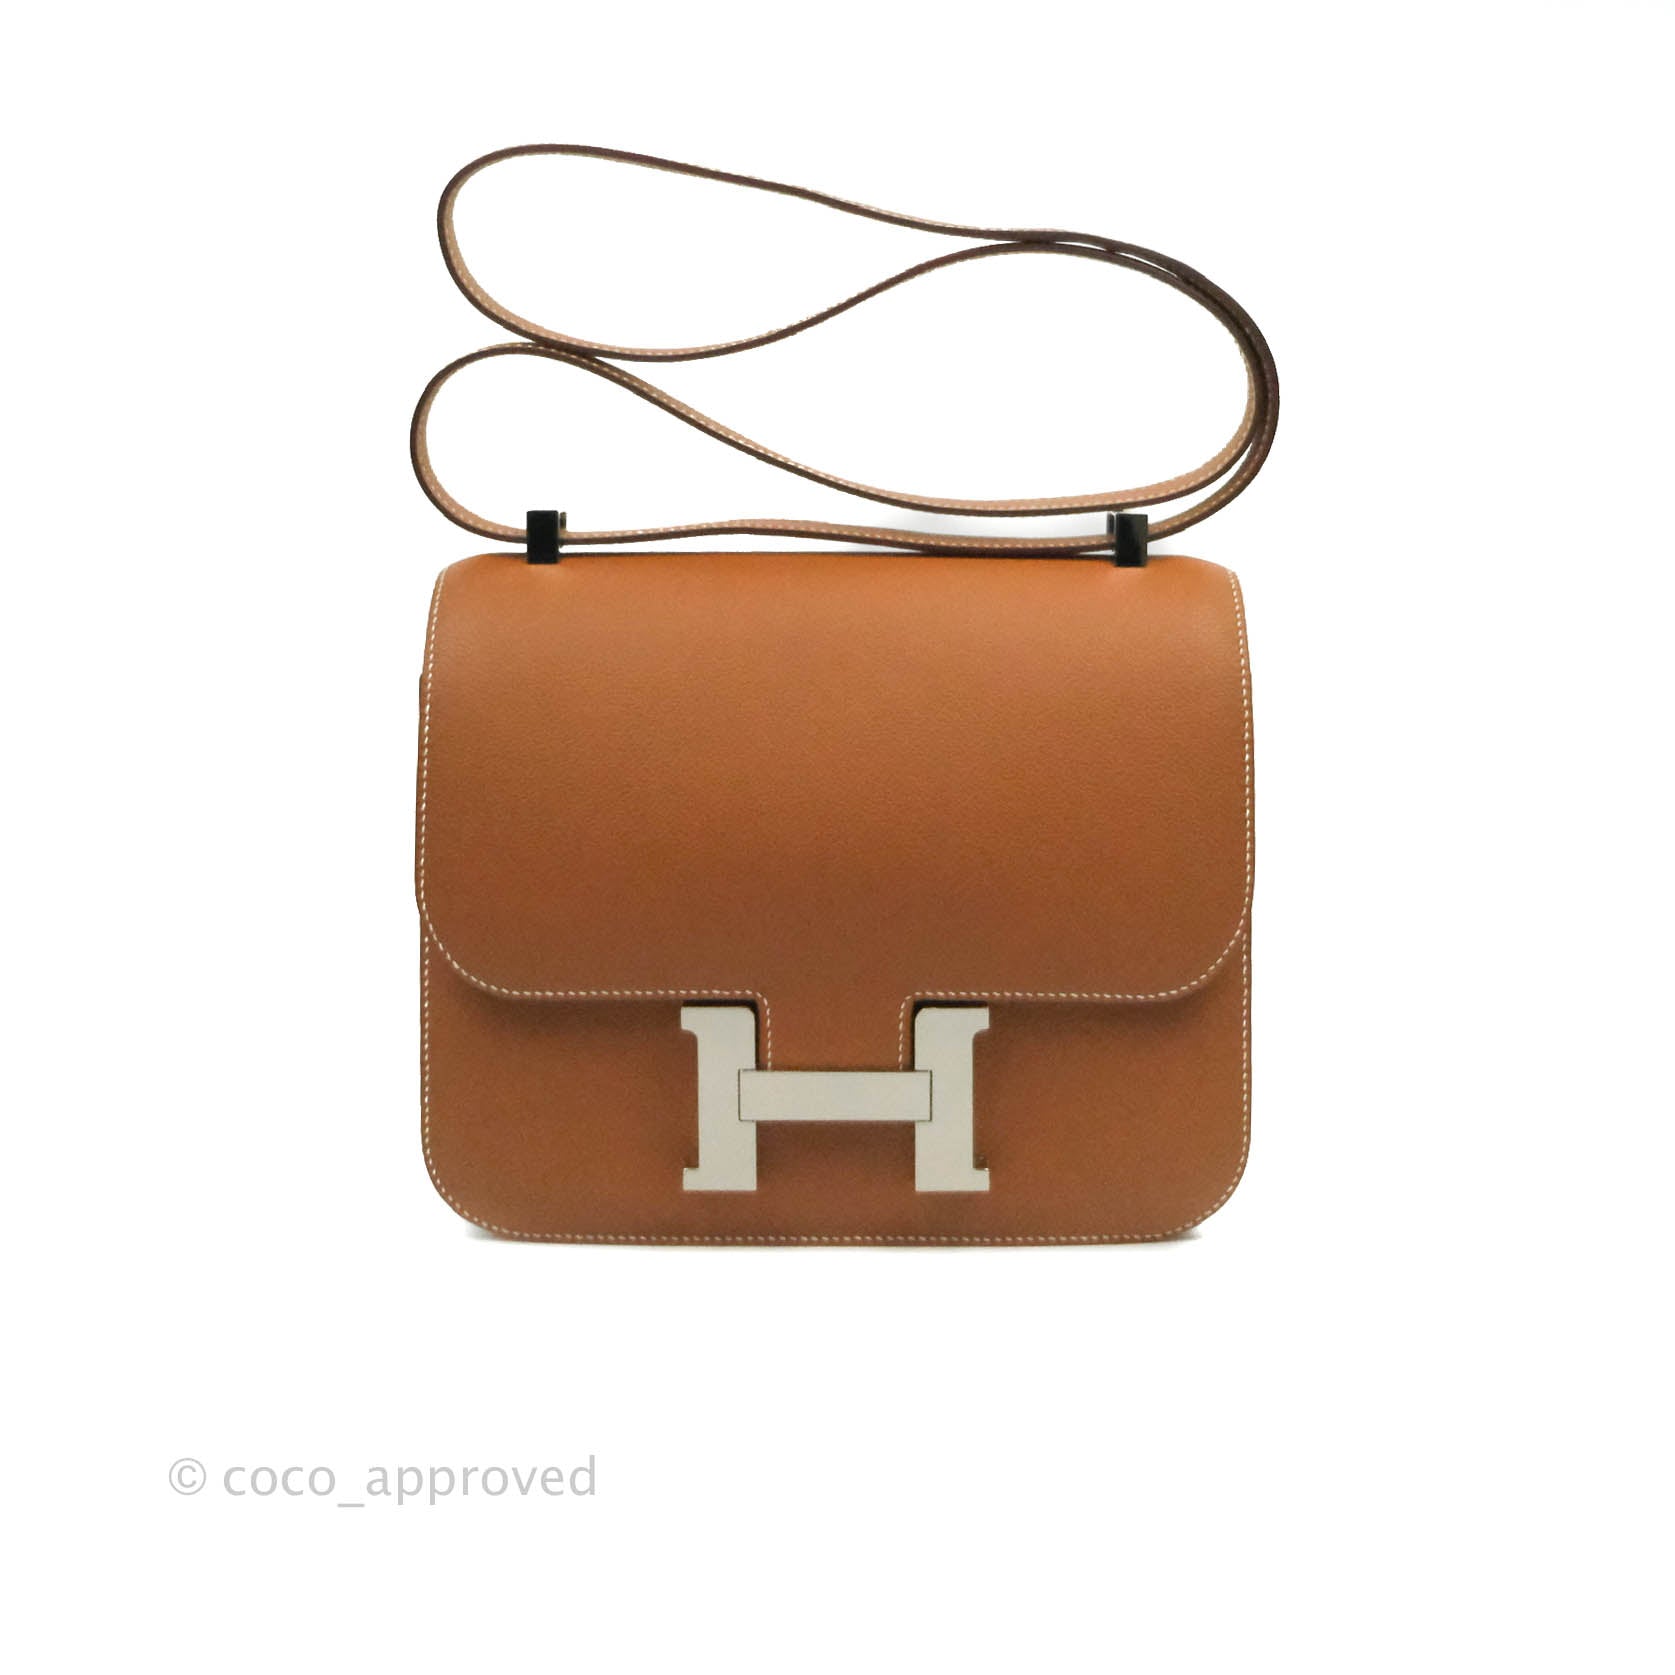 Hermes Constance Epsom Bag in Rouge Casaque with Palladium Hardware